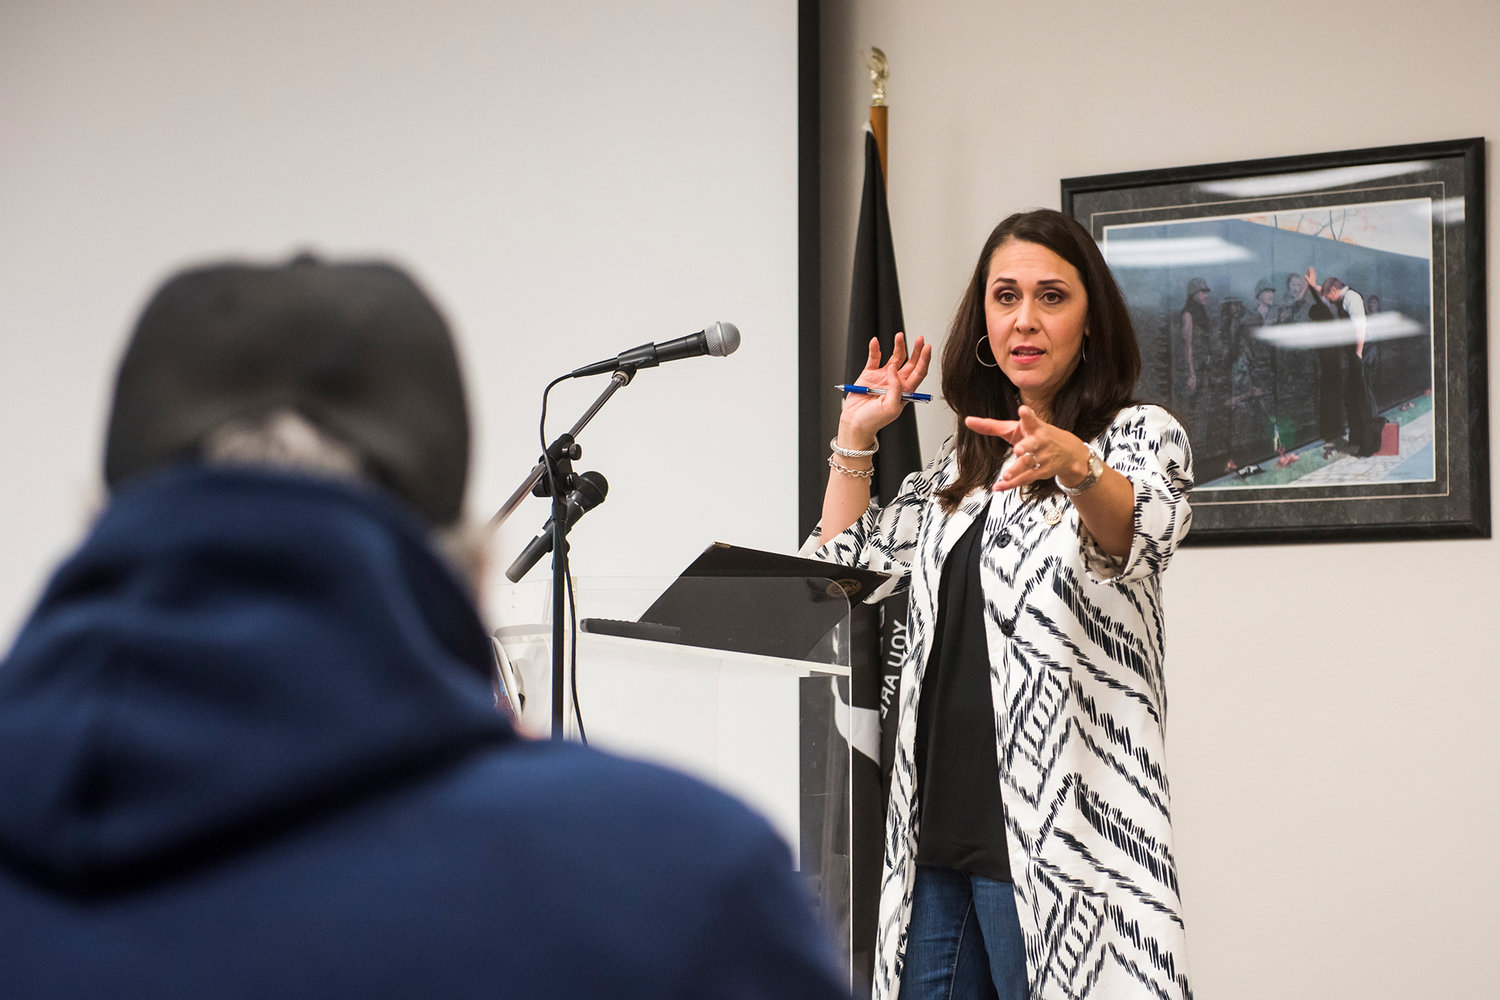 FILE PHOTO — Congresswoman Jaime Herrera Beutler talks about medical marijuana with veterans during a public meeting in October 2019 at the Veterans Memorial Museum.